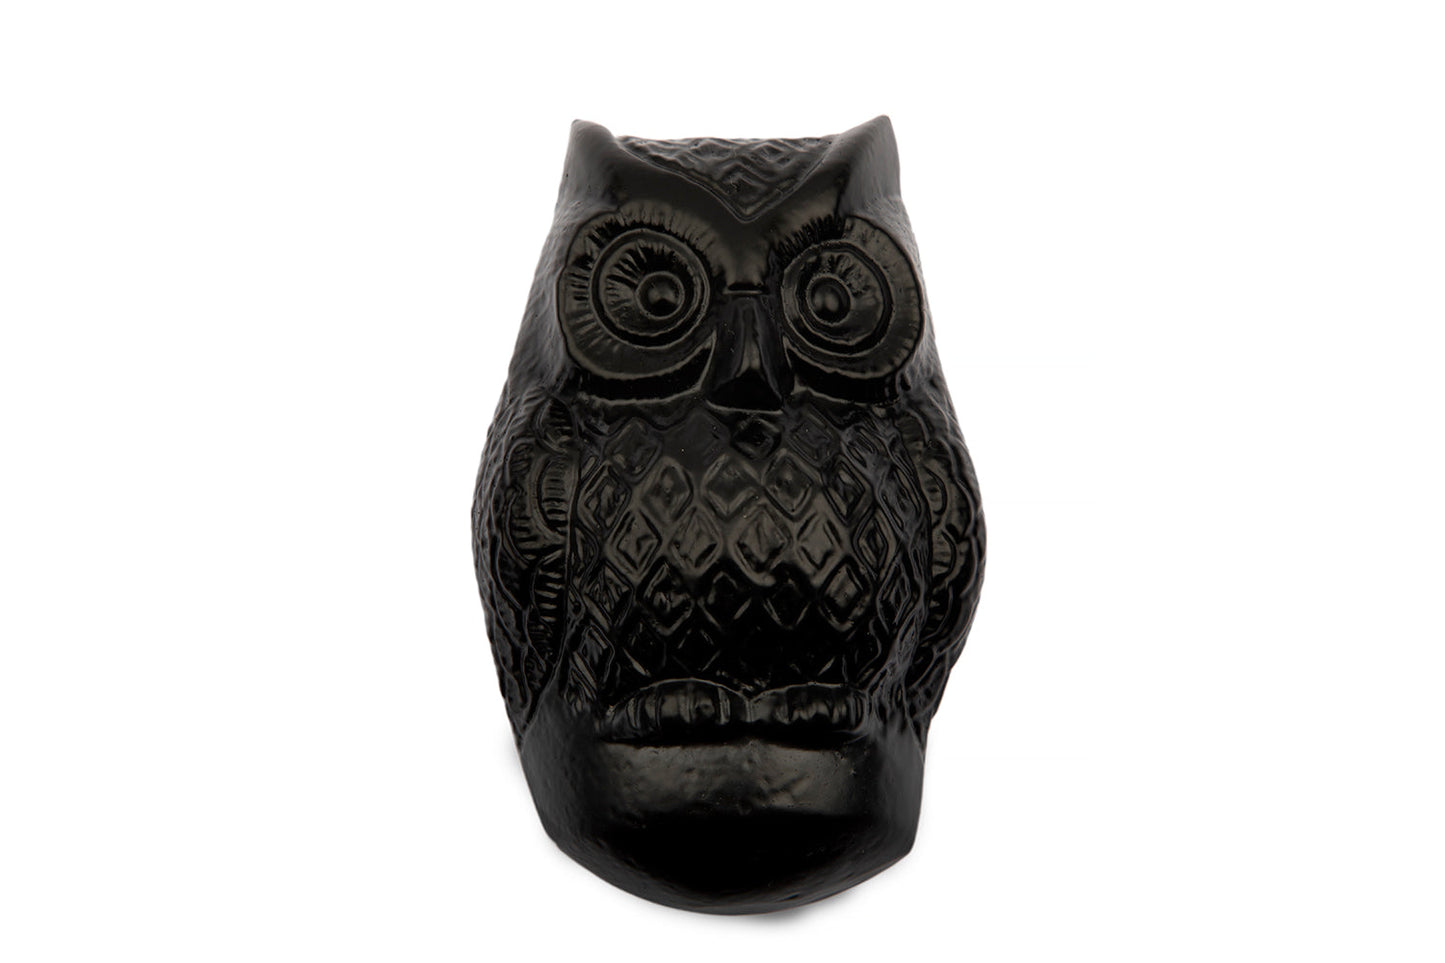 Antique Black Owl Door Knocker Supplied with Matching Fixing Screws